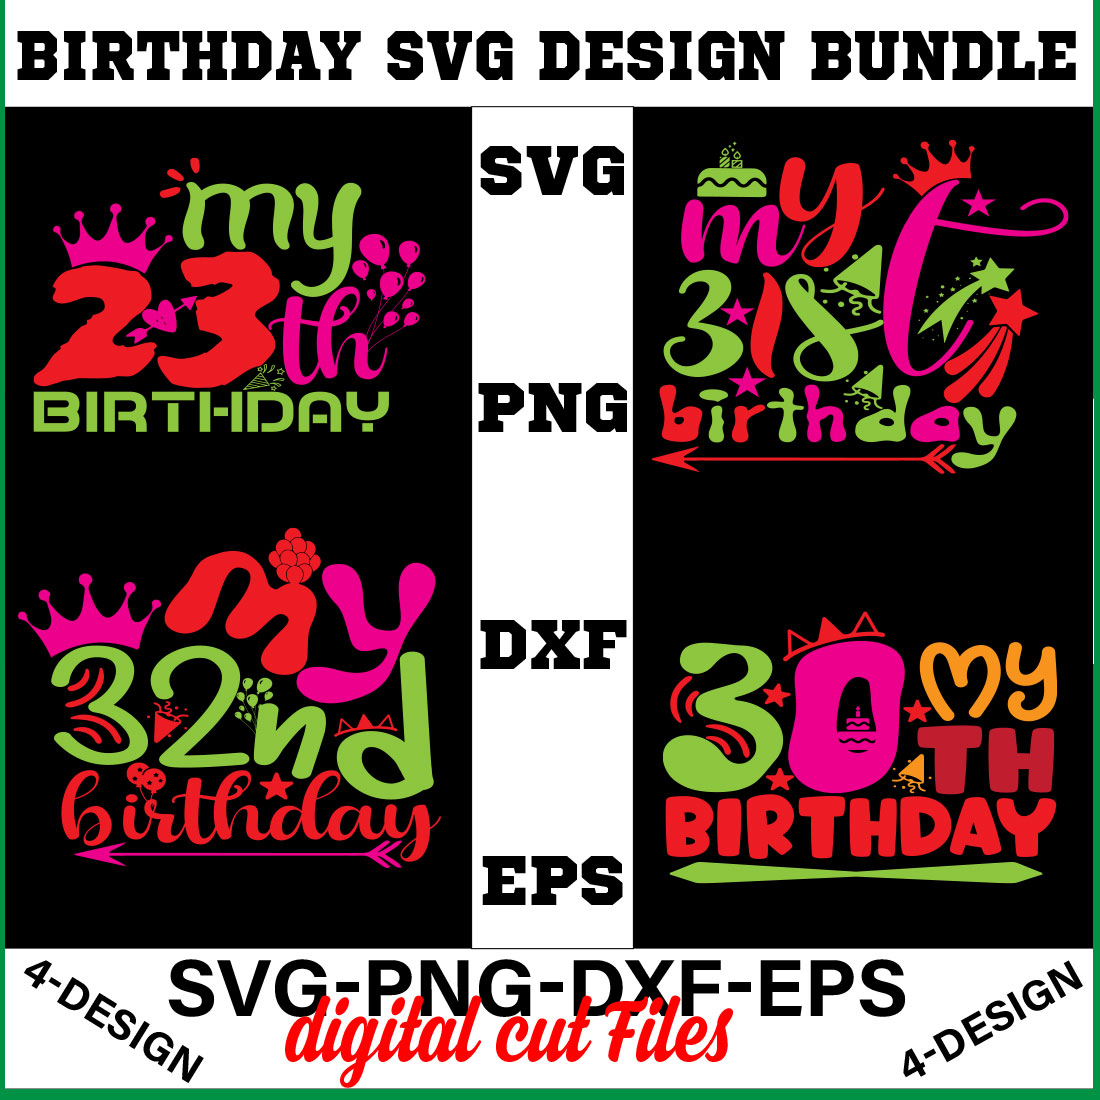 birthday svg design bundle Happy birthday svg bundle hand lettered birthday svg birthday party svg Volume-08 cover image.